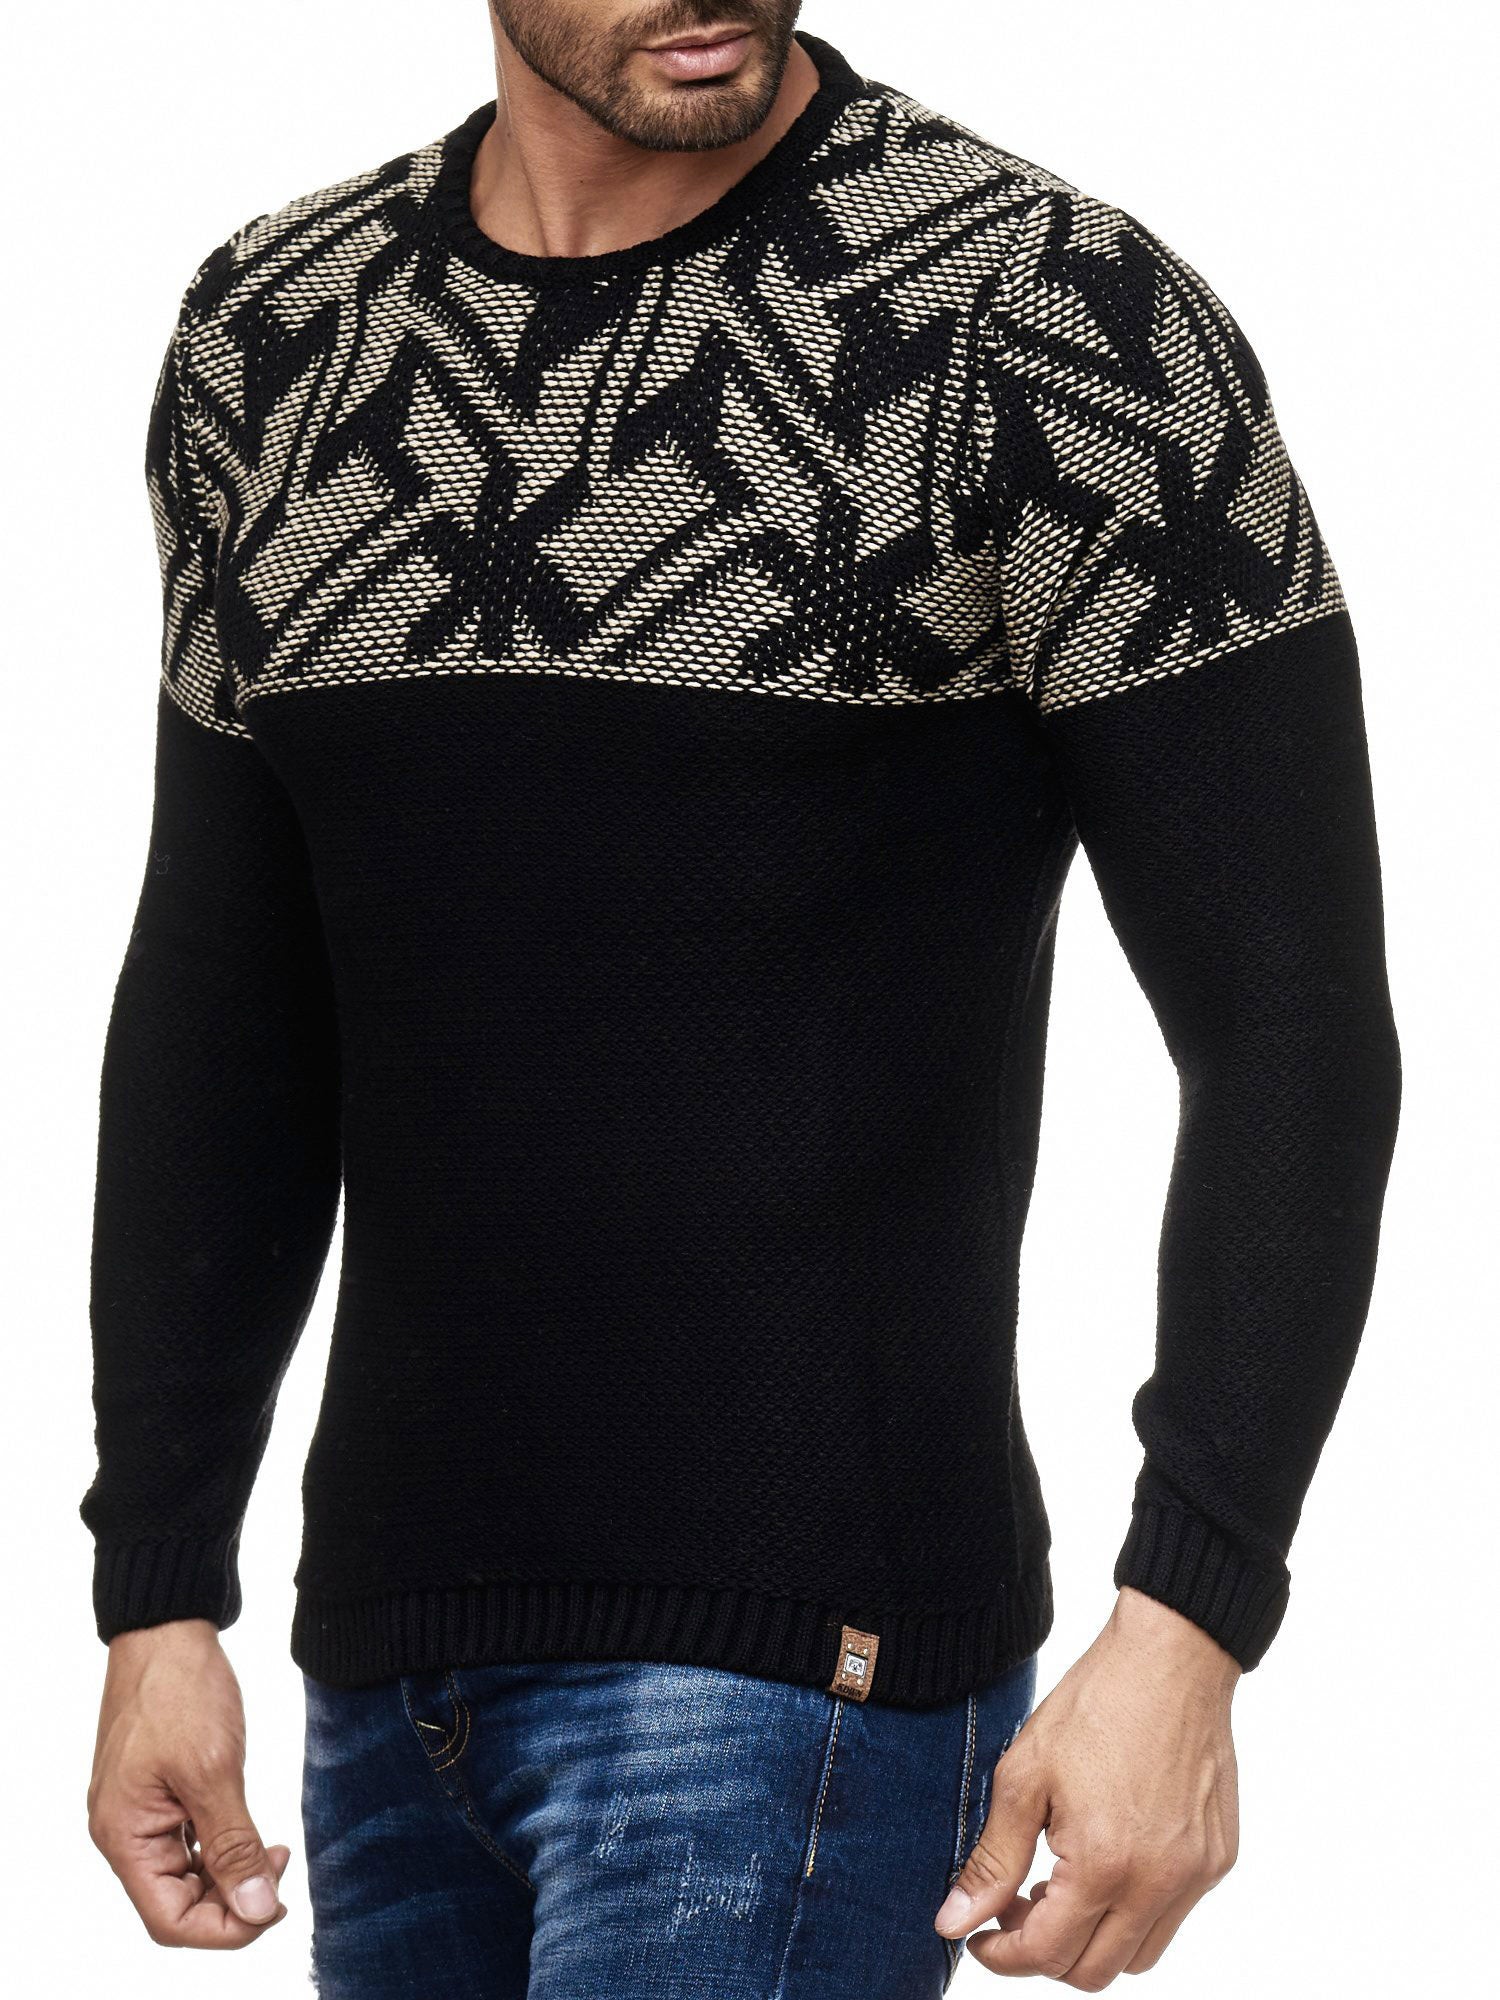 K&D Men Stylish Maze Top Pullover Sweater - Black - FASH STOP